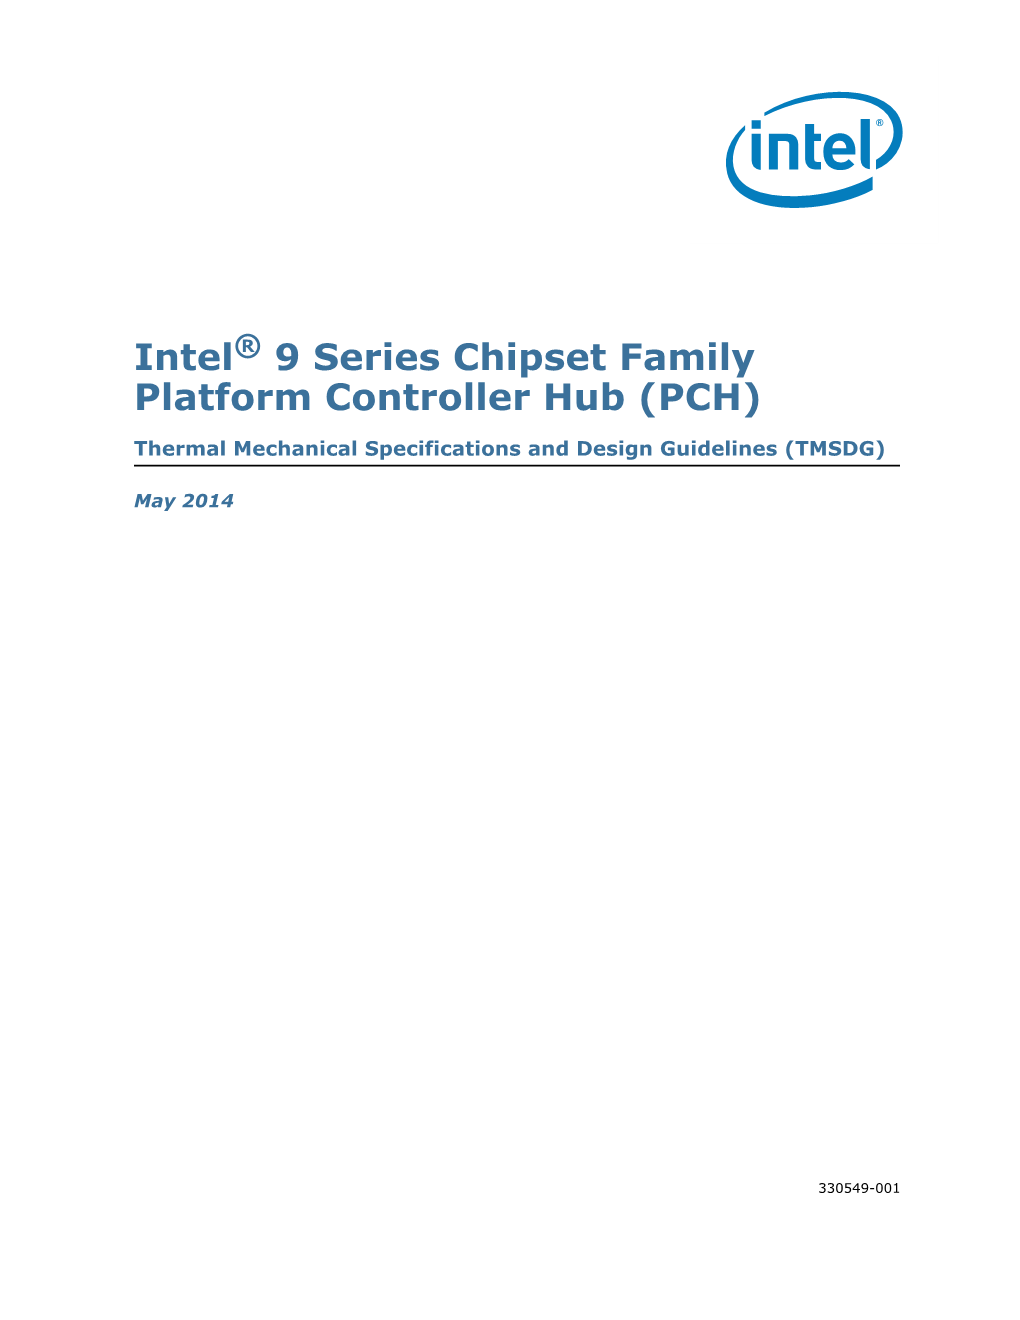 Intel® 9 Series Chipset Family Platform Controller Hub (PCH)